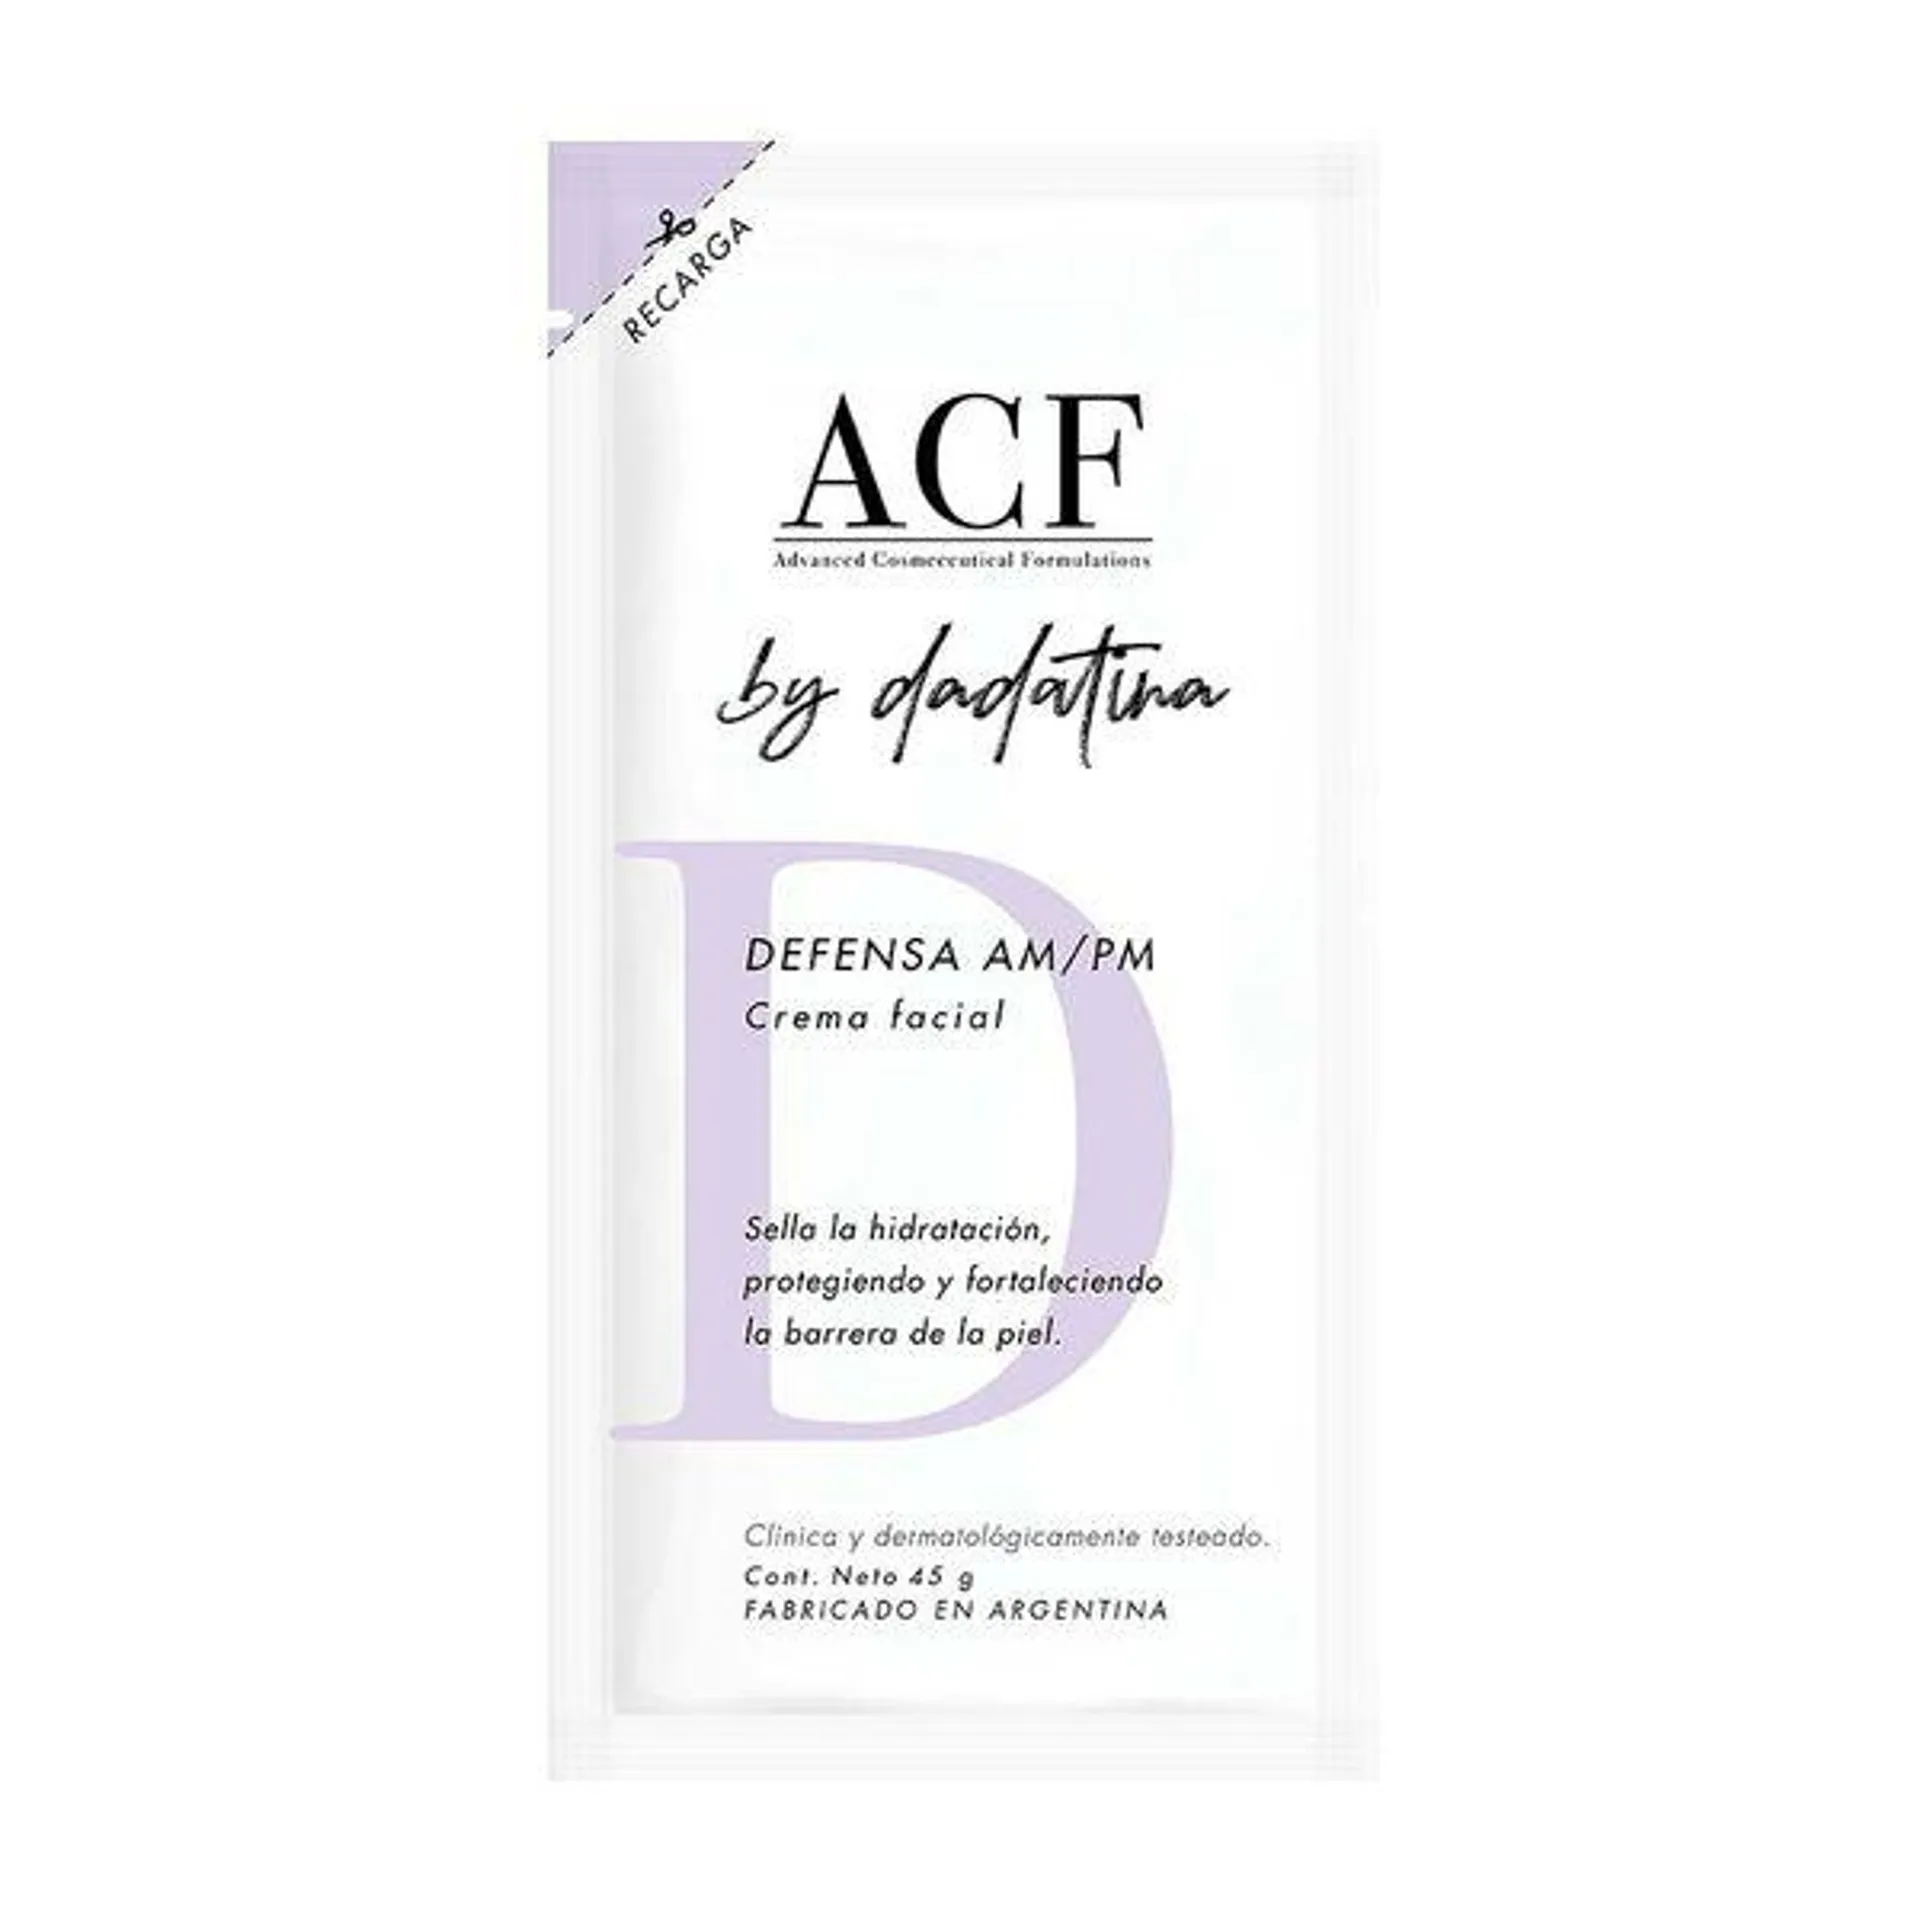 Crema Facial Acf Defensa Am/Pm by Dadatina x 50 g